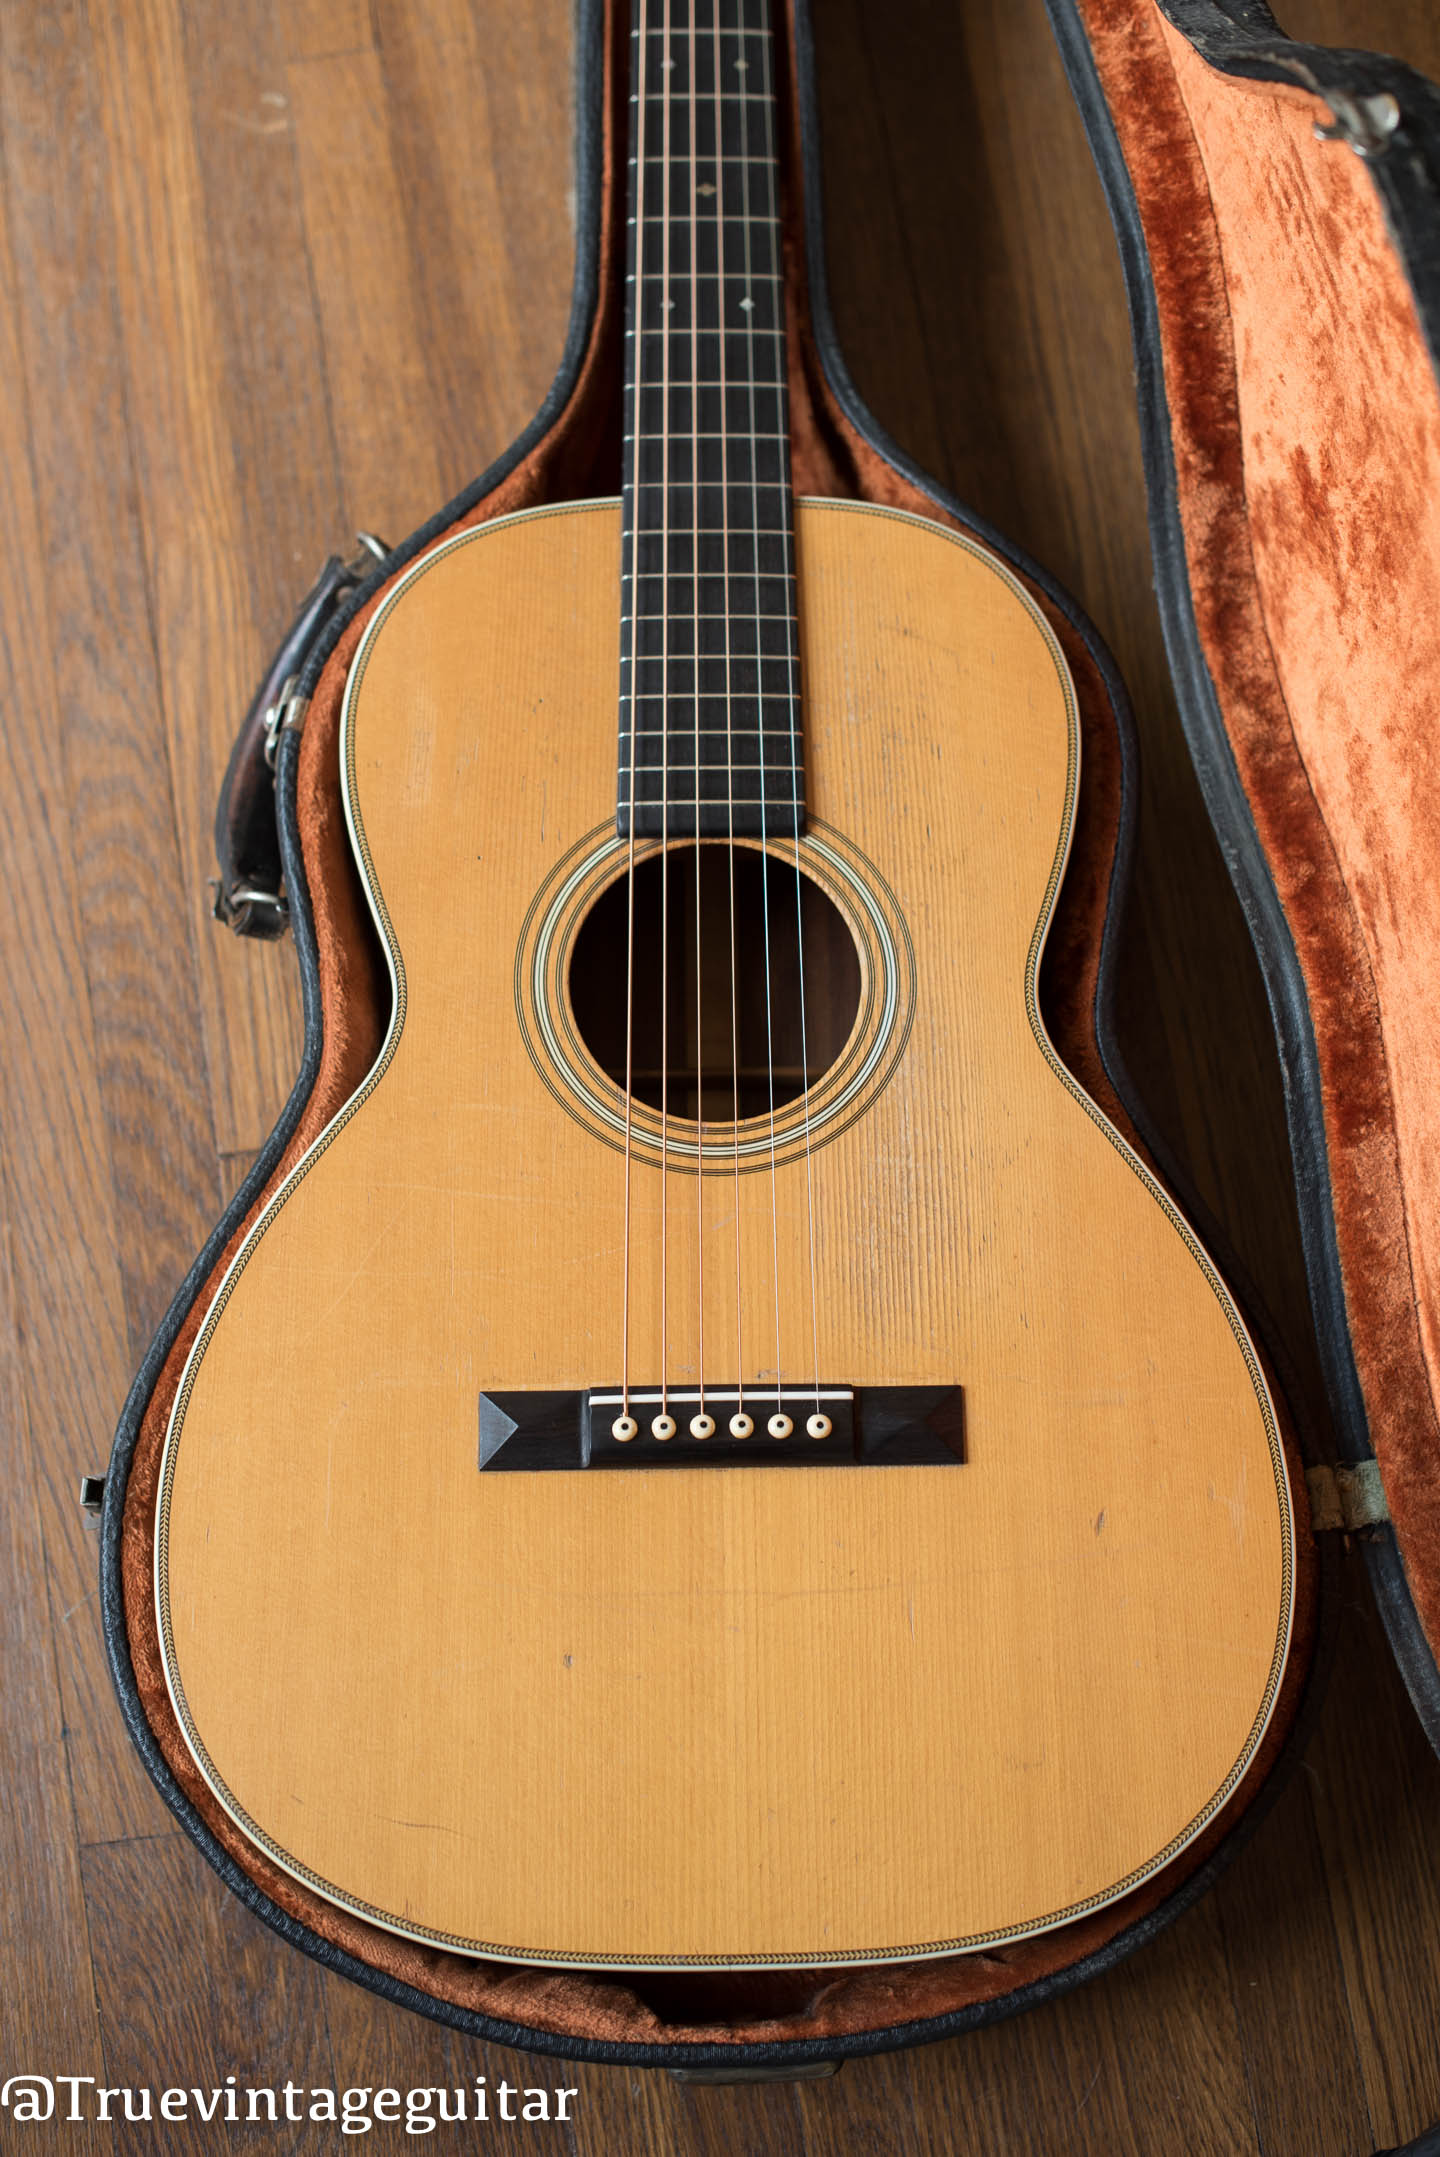 Vintage 1920s 1930s Martin acoustic guitar